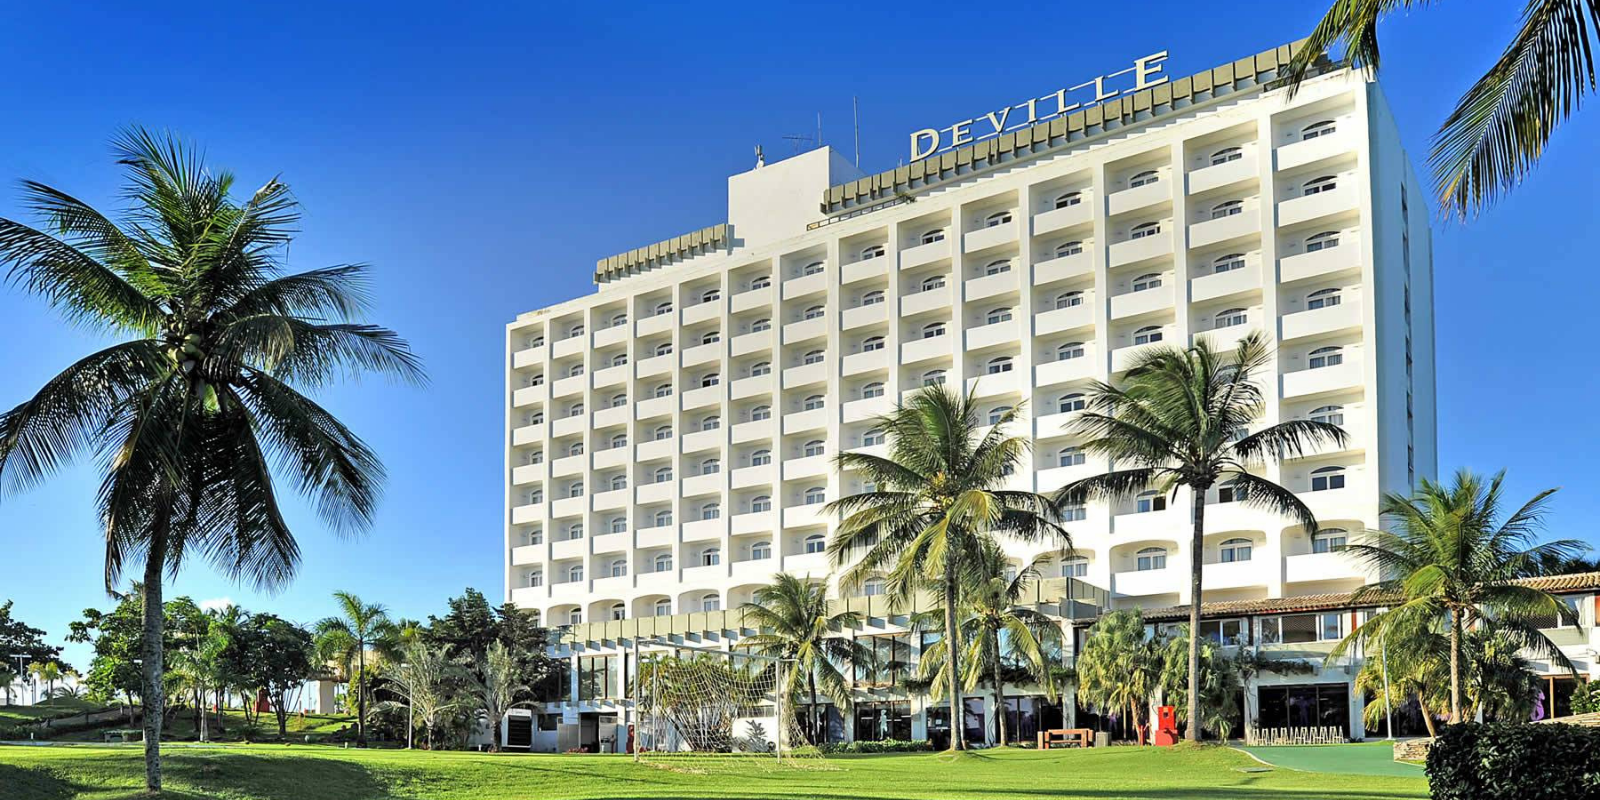 Hotéis Deville check-in virtual